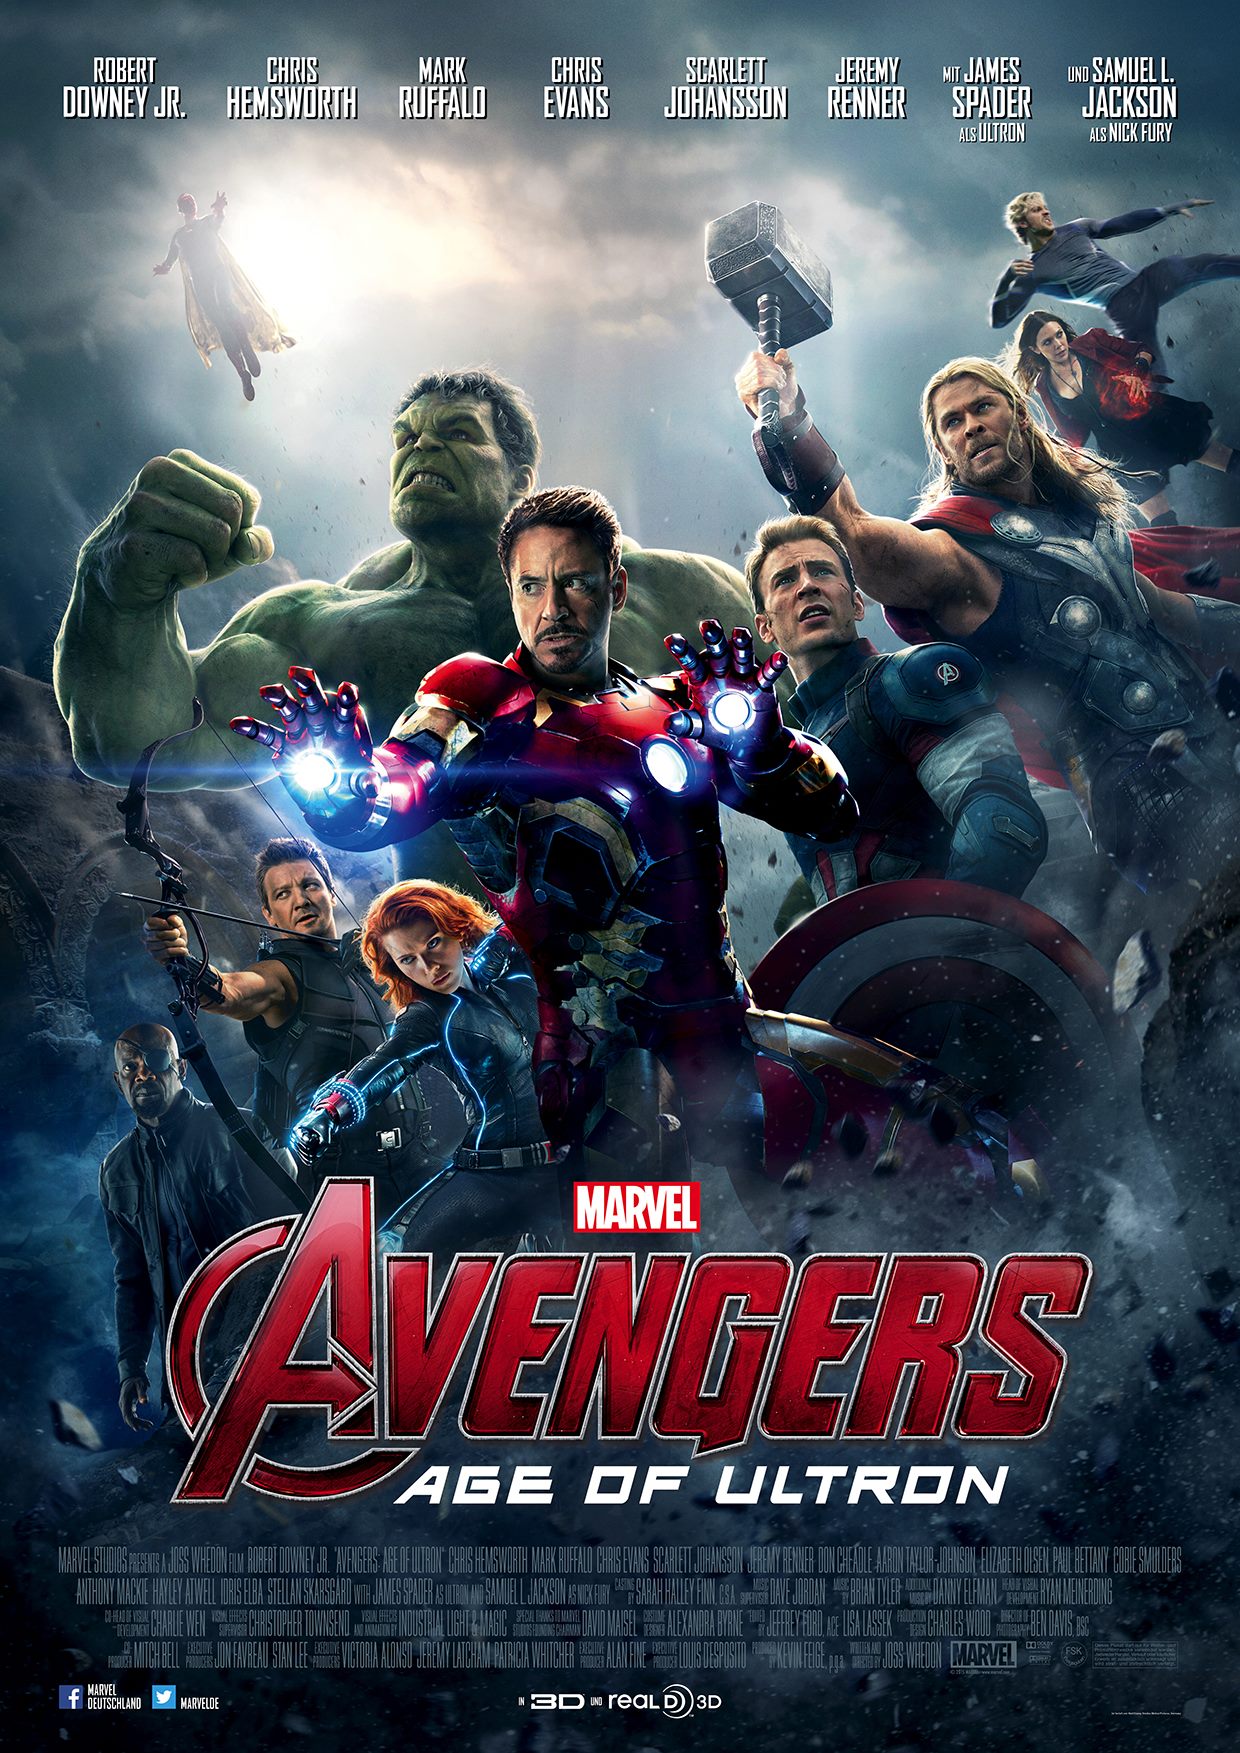 Avengers Age of Ultron POSTER FILM A4 A3 A2 A1 grande formato cinema film 